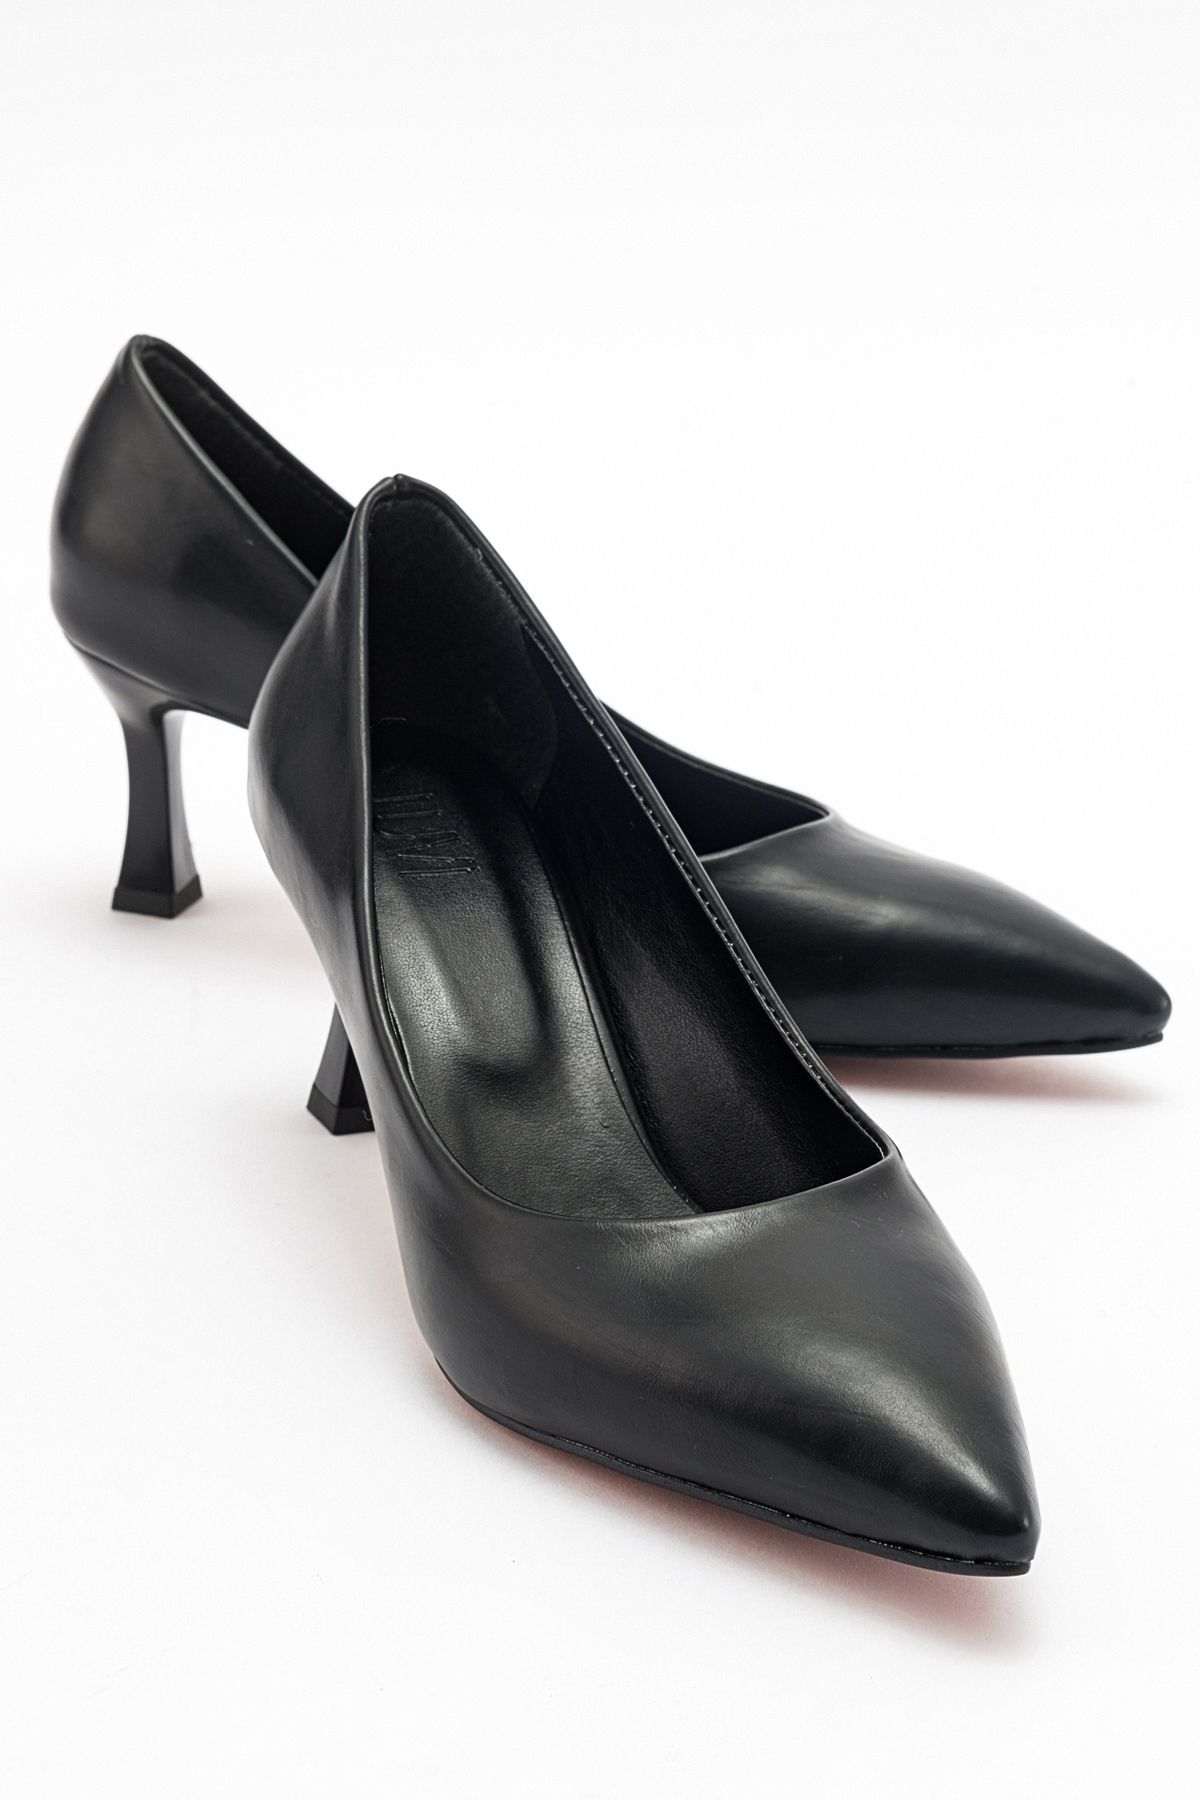 luvishoes PEDRA Siyah Cilt Kadın Topuklu Ayakkabı